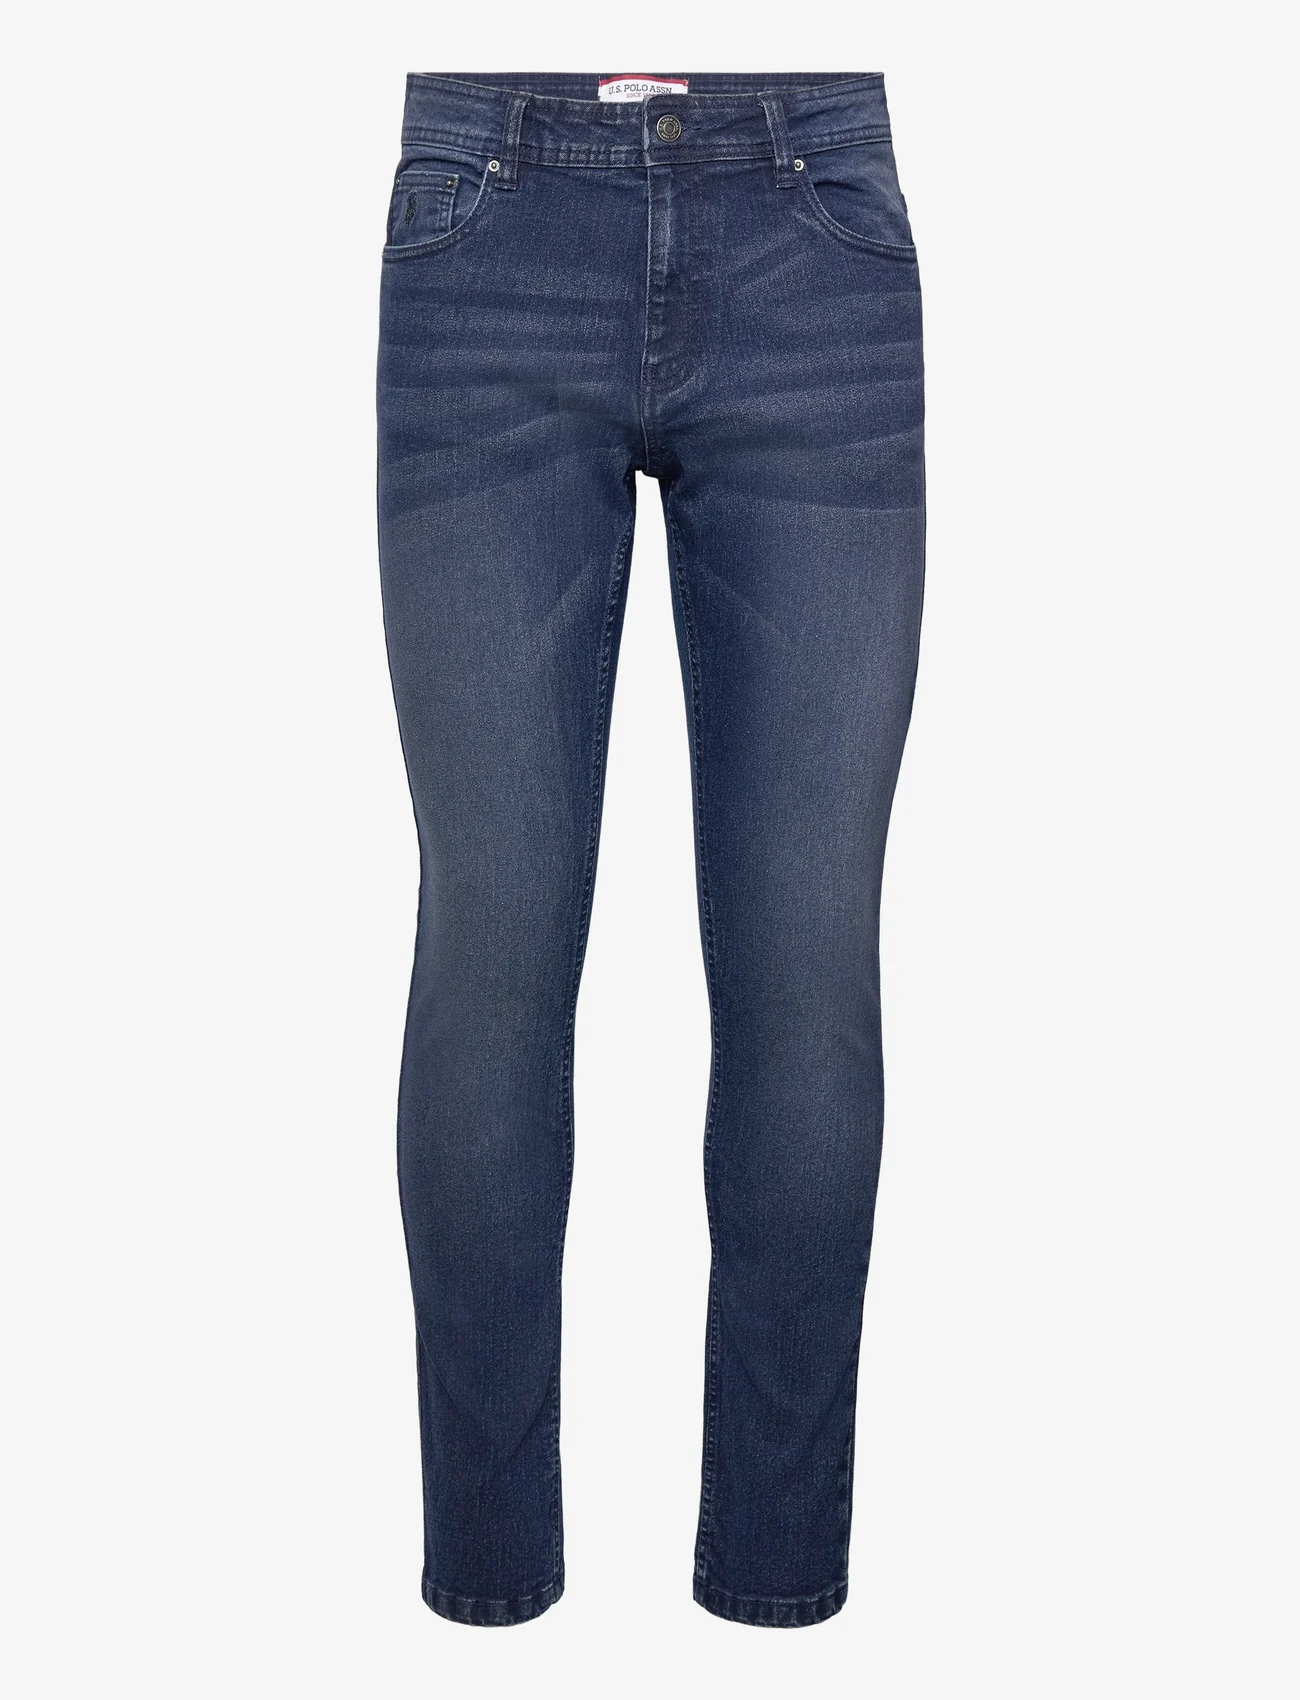 U.S. Polo Assn. - USPA Jeans Slim Casbian Men - slim fit jeans - dk. indigo - 0